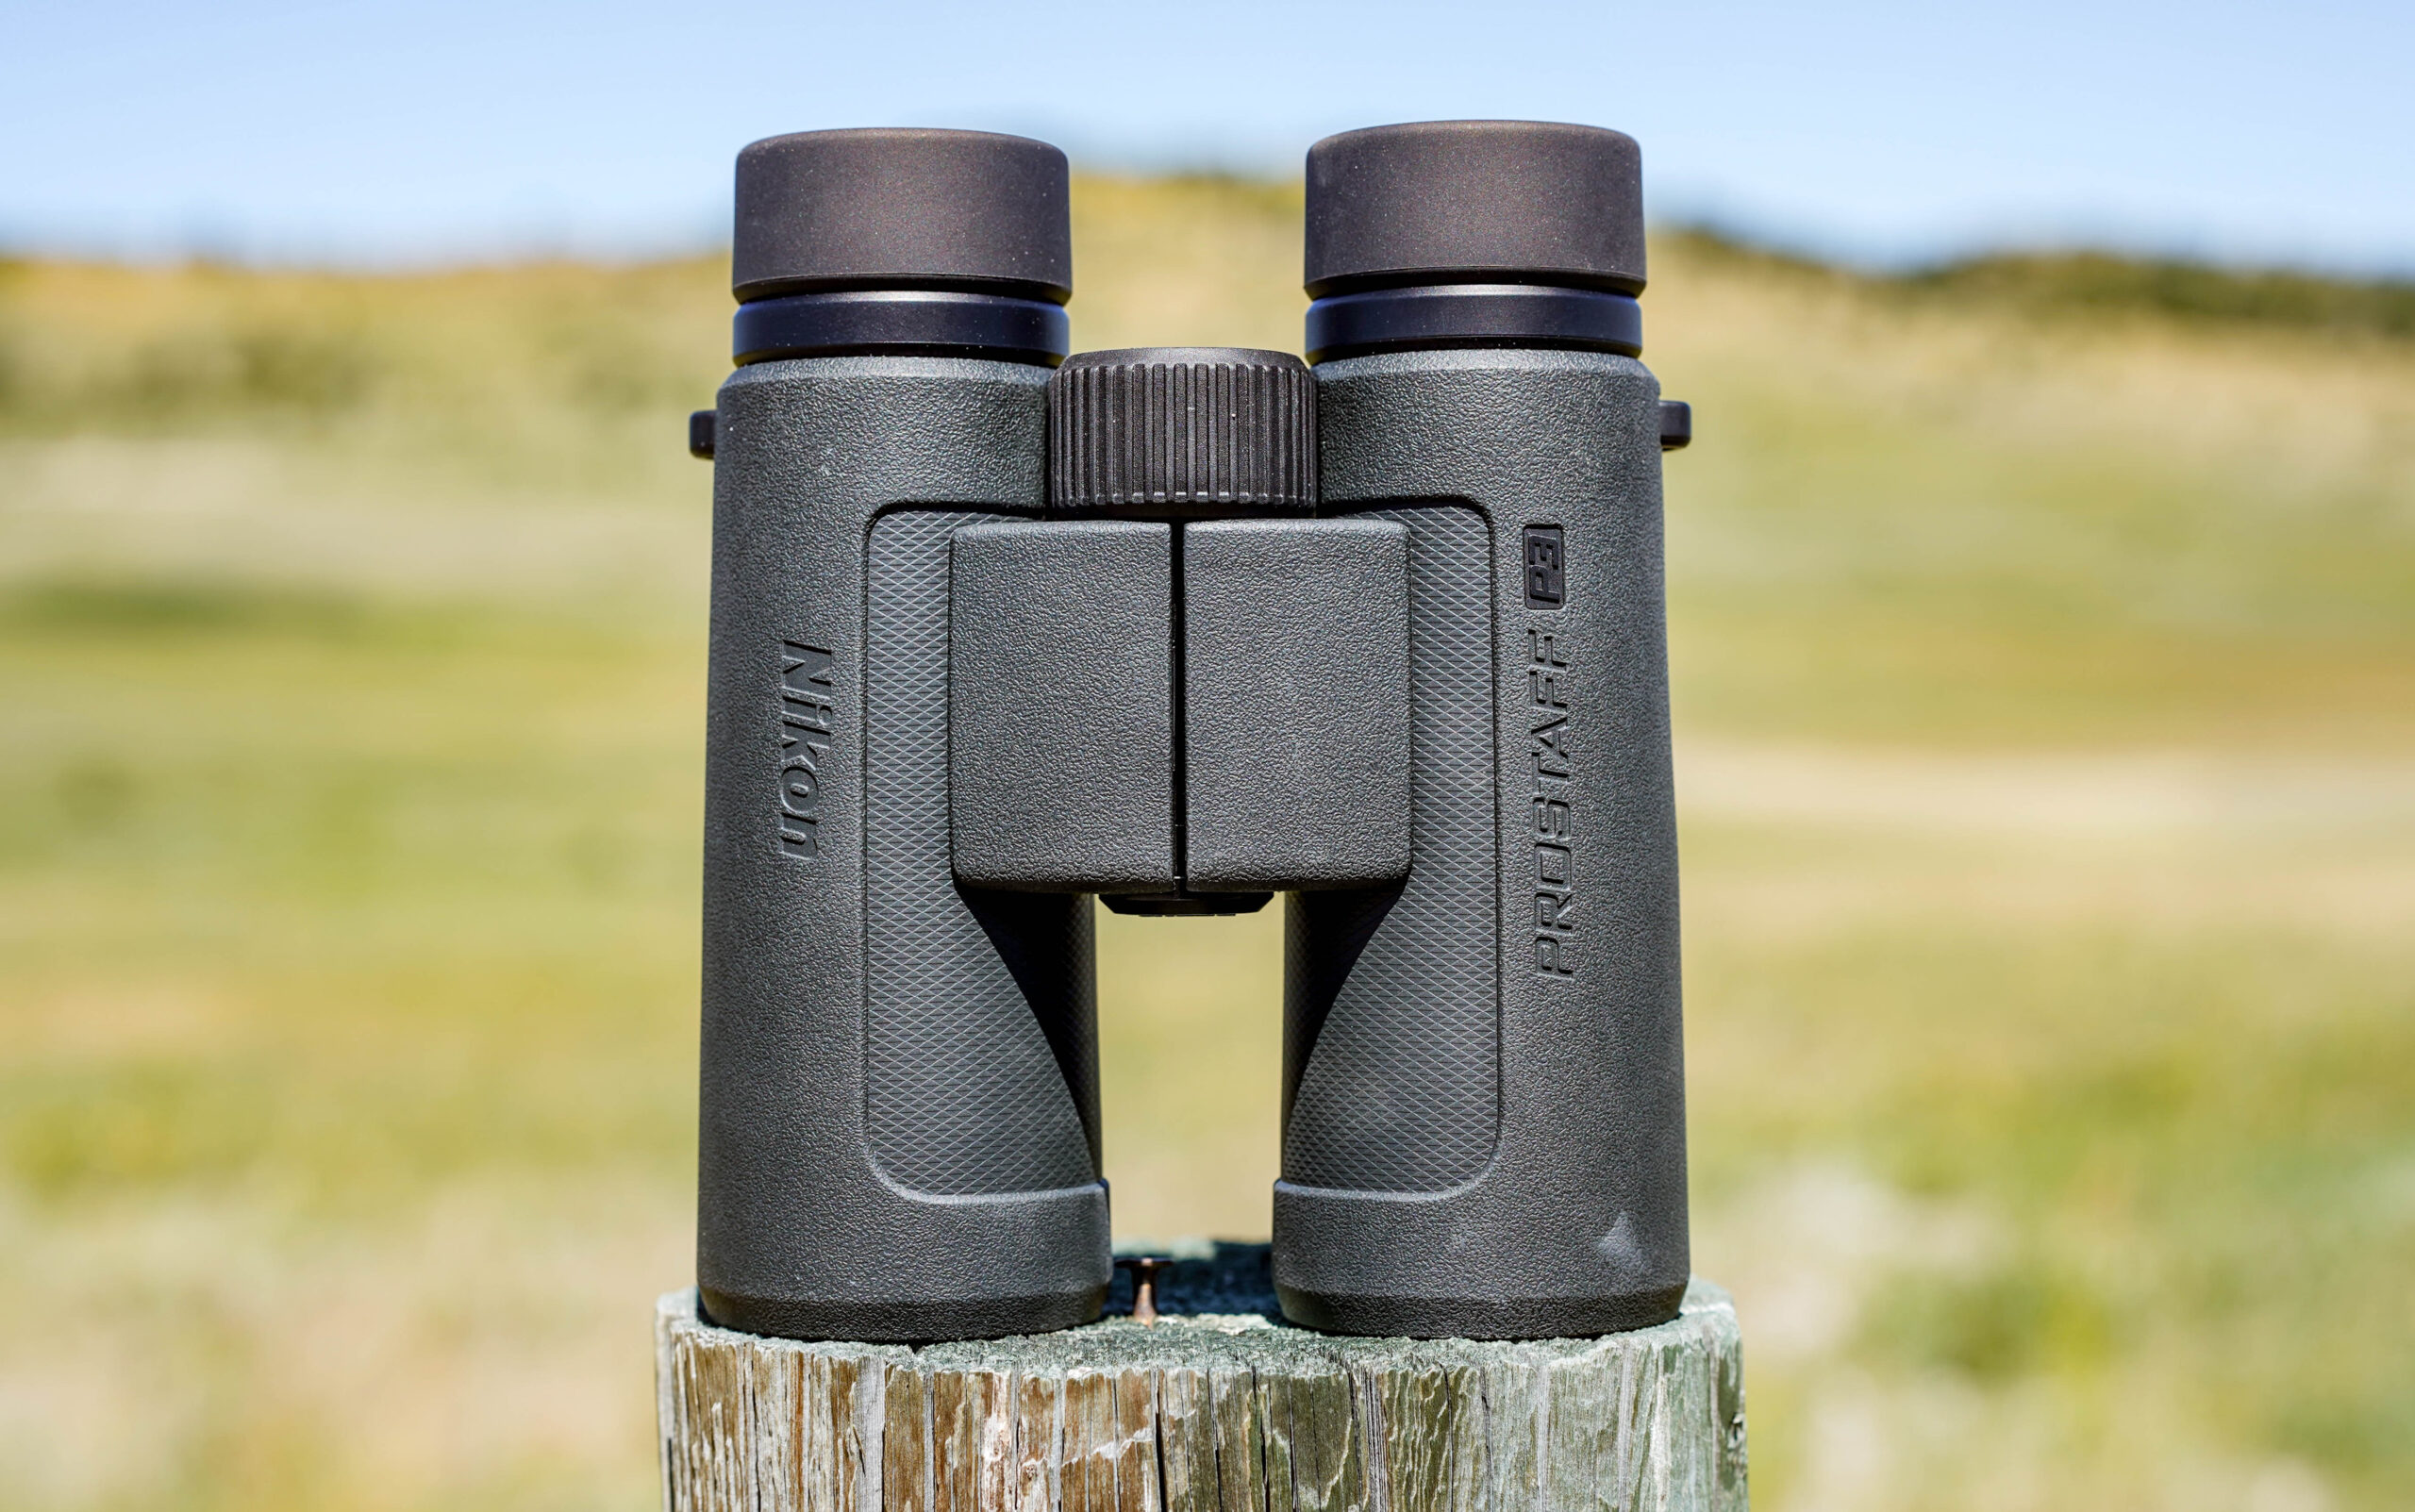 The Nikon Pro Staff binoculars